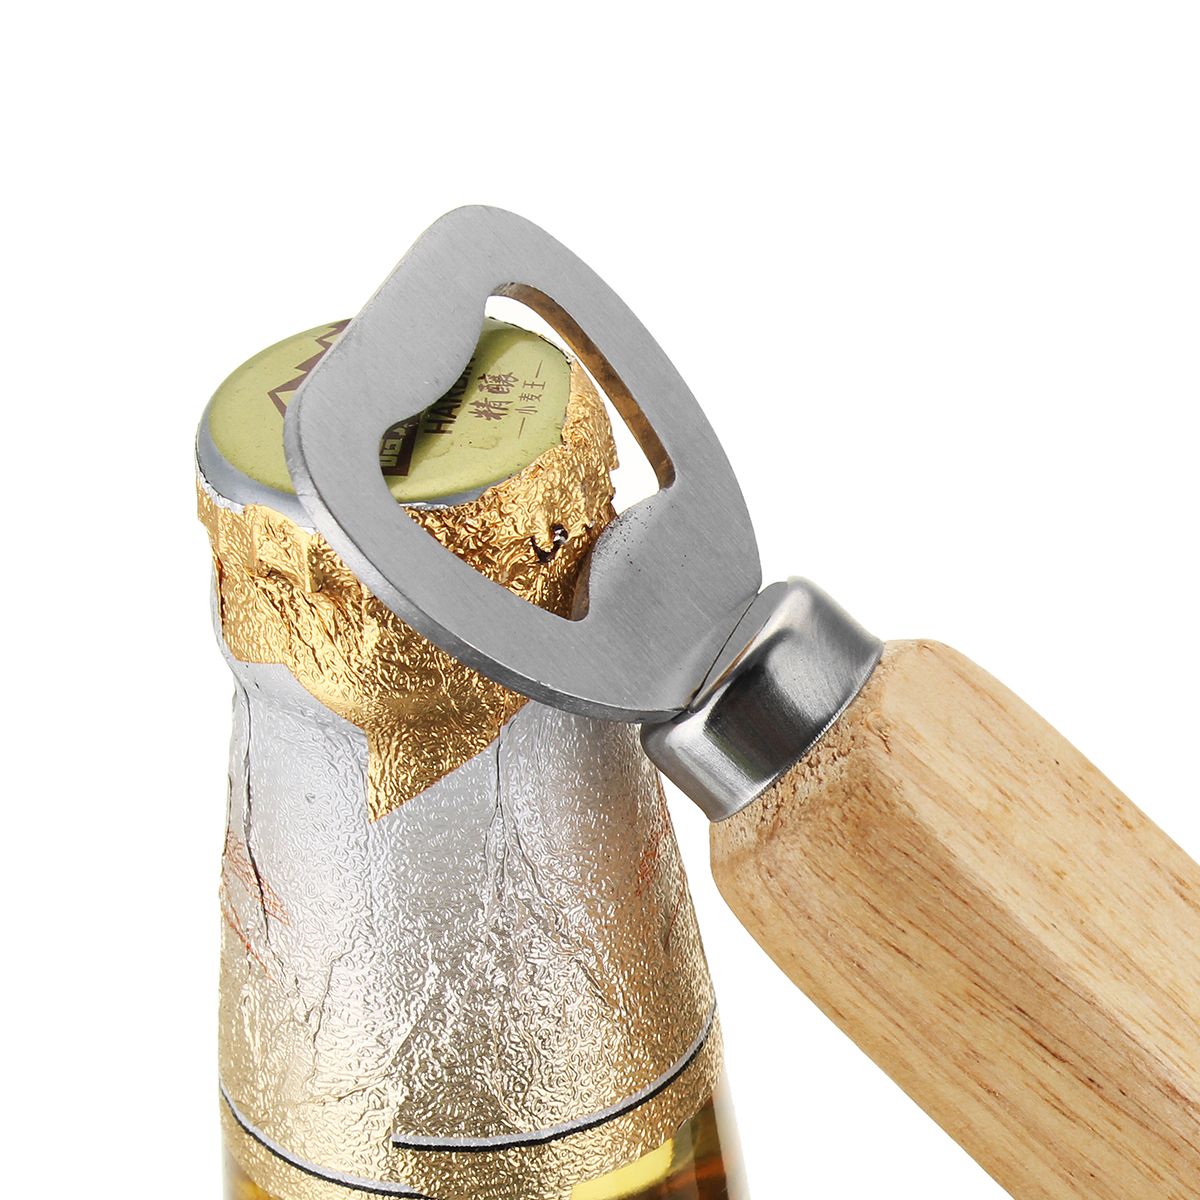 Wooden-Handle-Bottle-Opener-Soft-Handle-Smooth-Beer-Opening-Tool-1226331